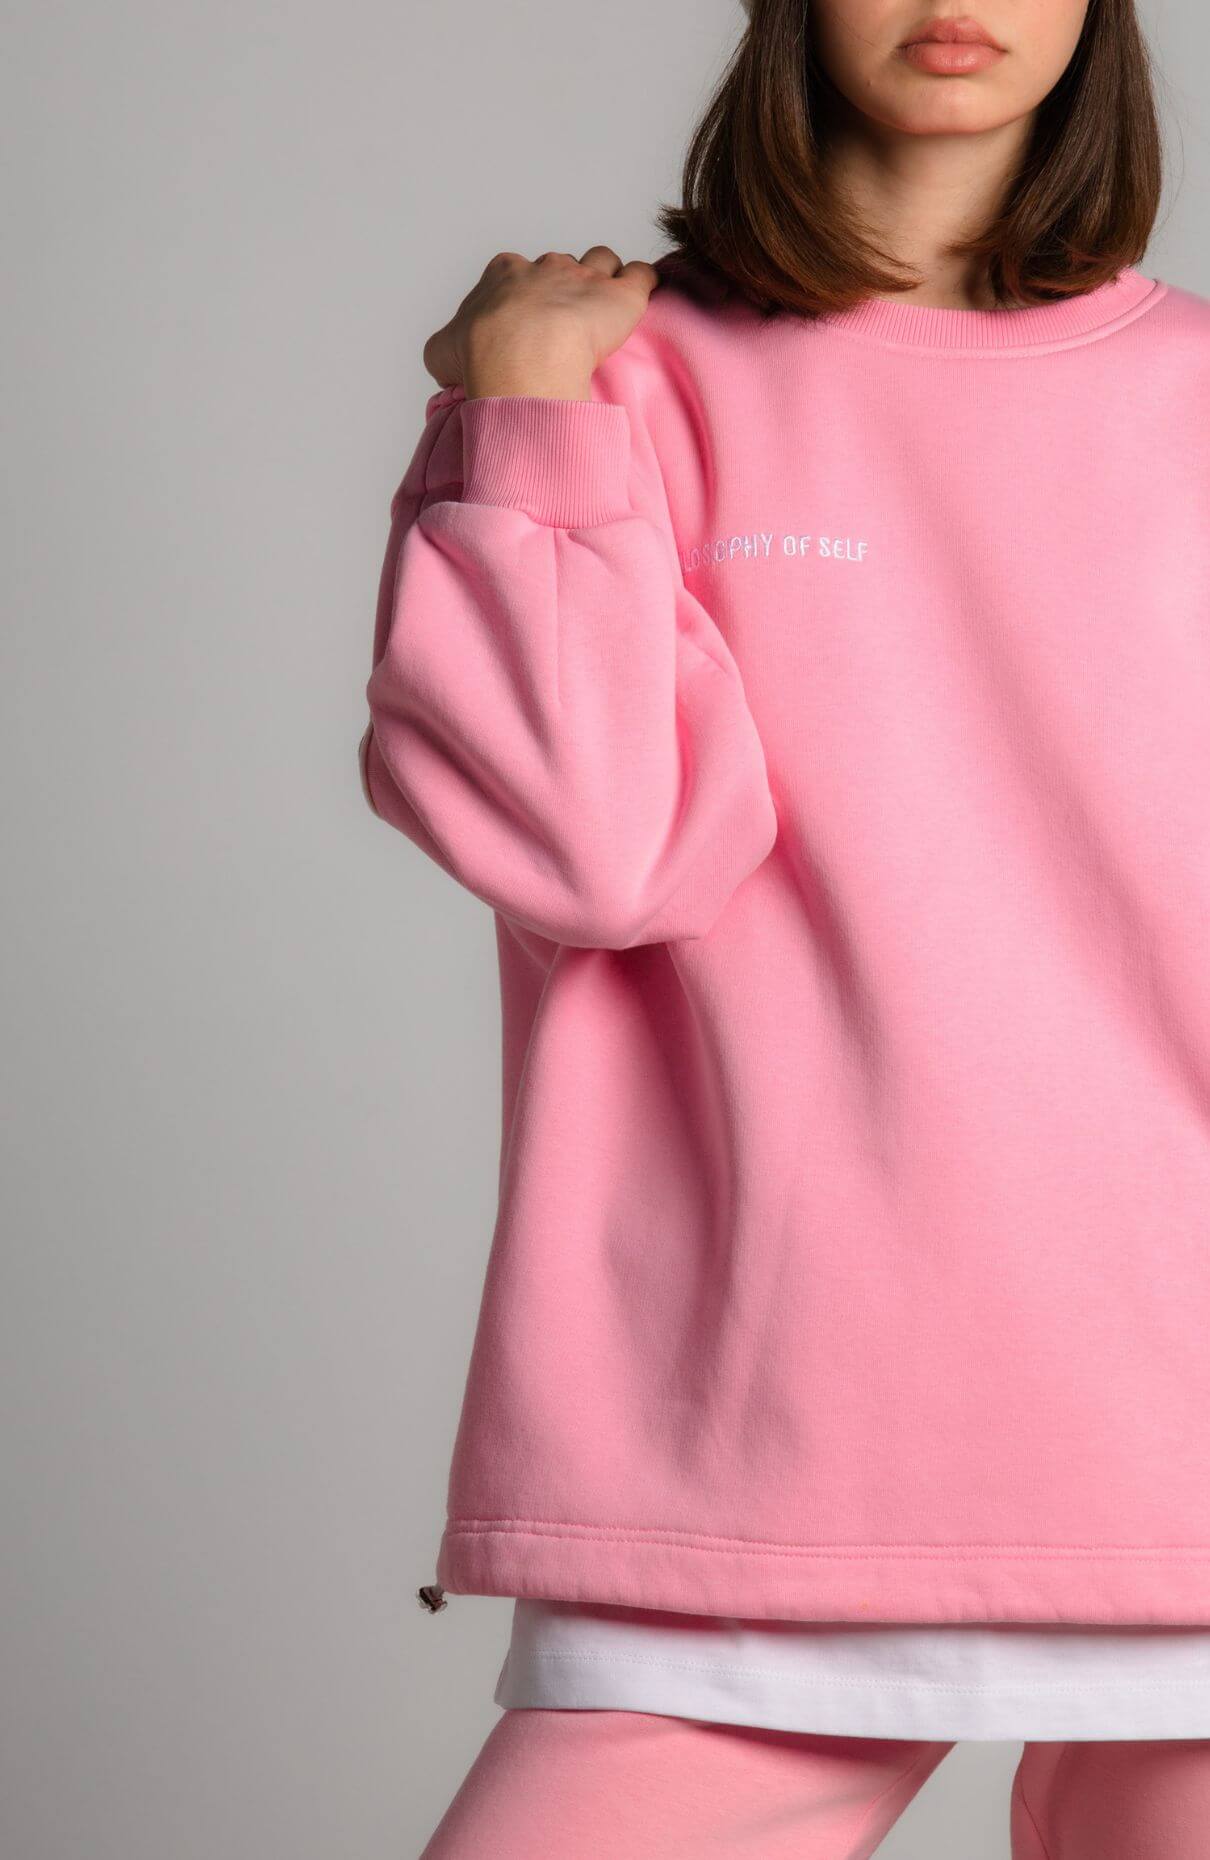 Oversized sweatshirt in pink - Philosophy of Self